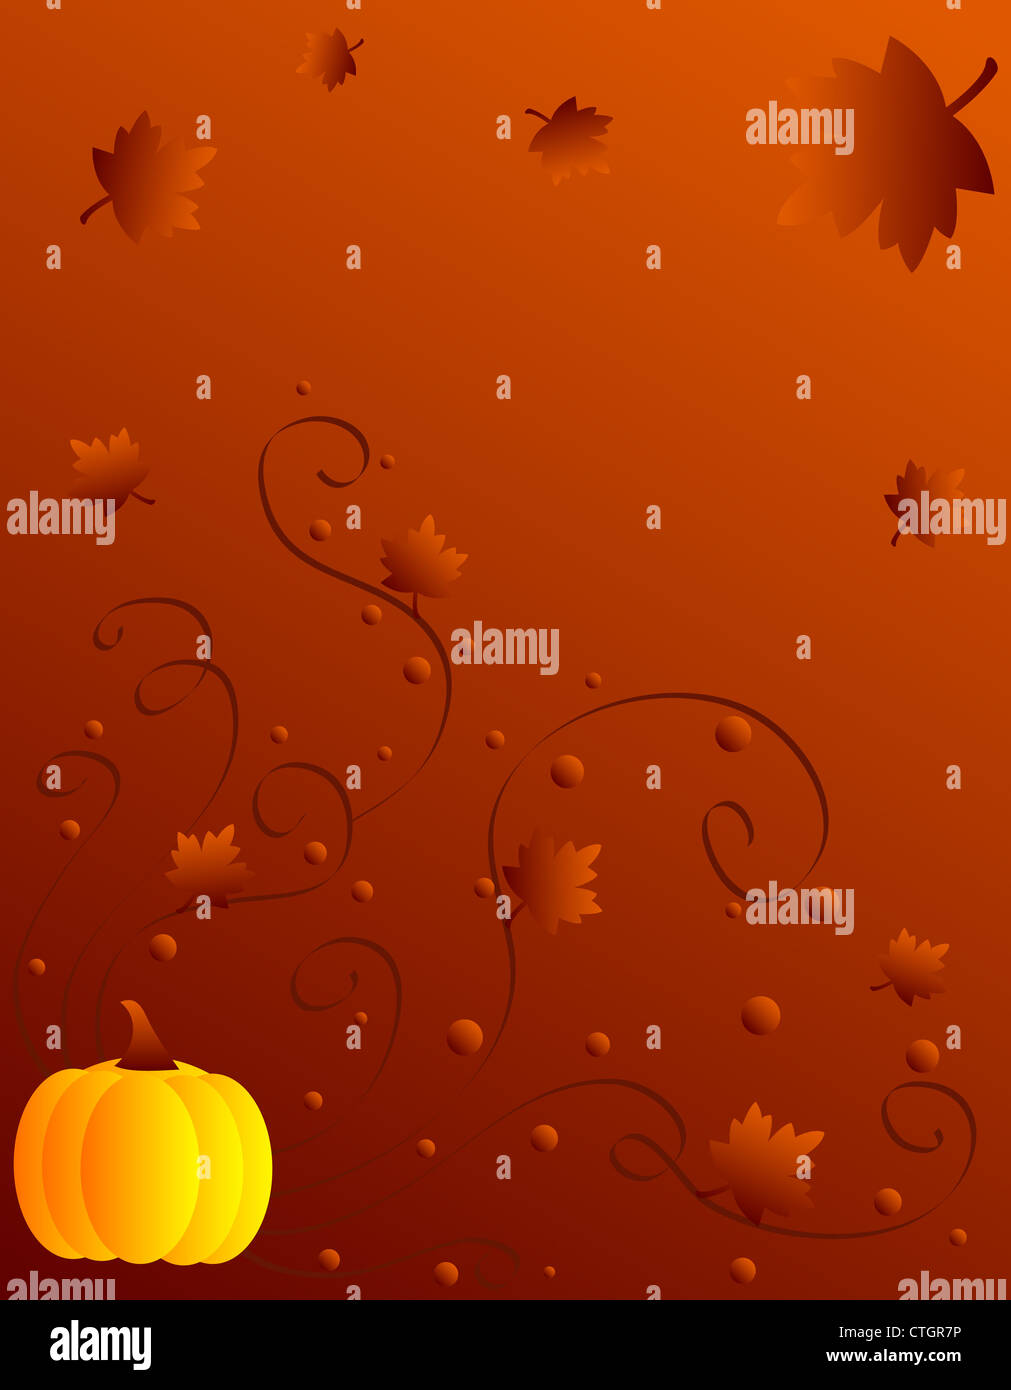 Autumn leaves and pumpkin design Stock Photo